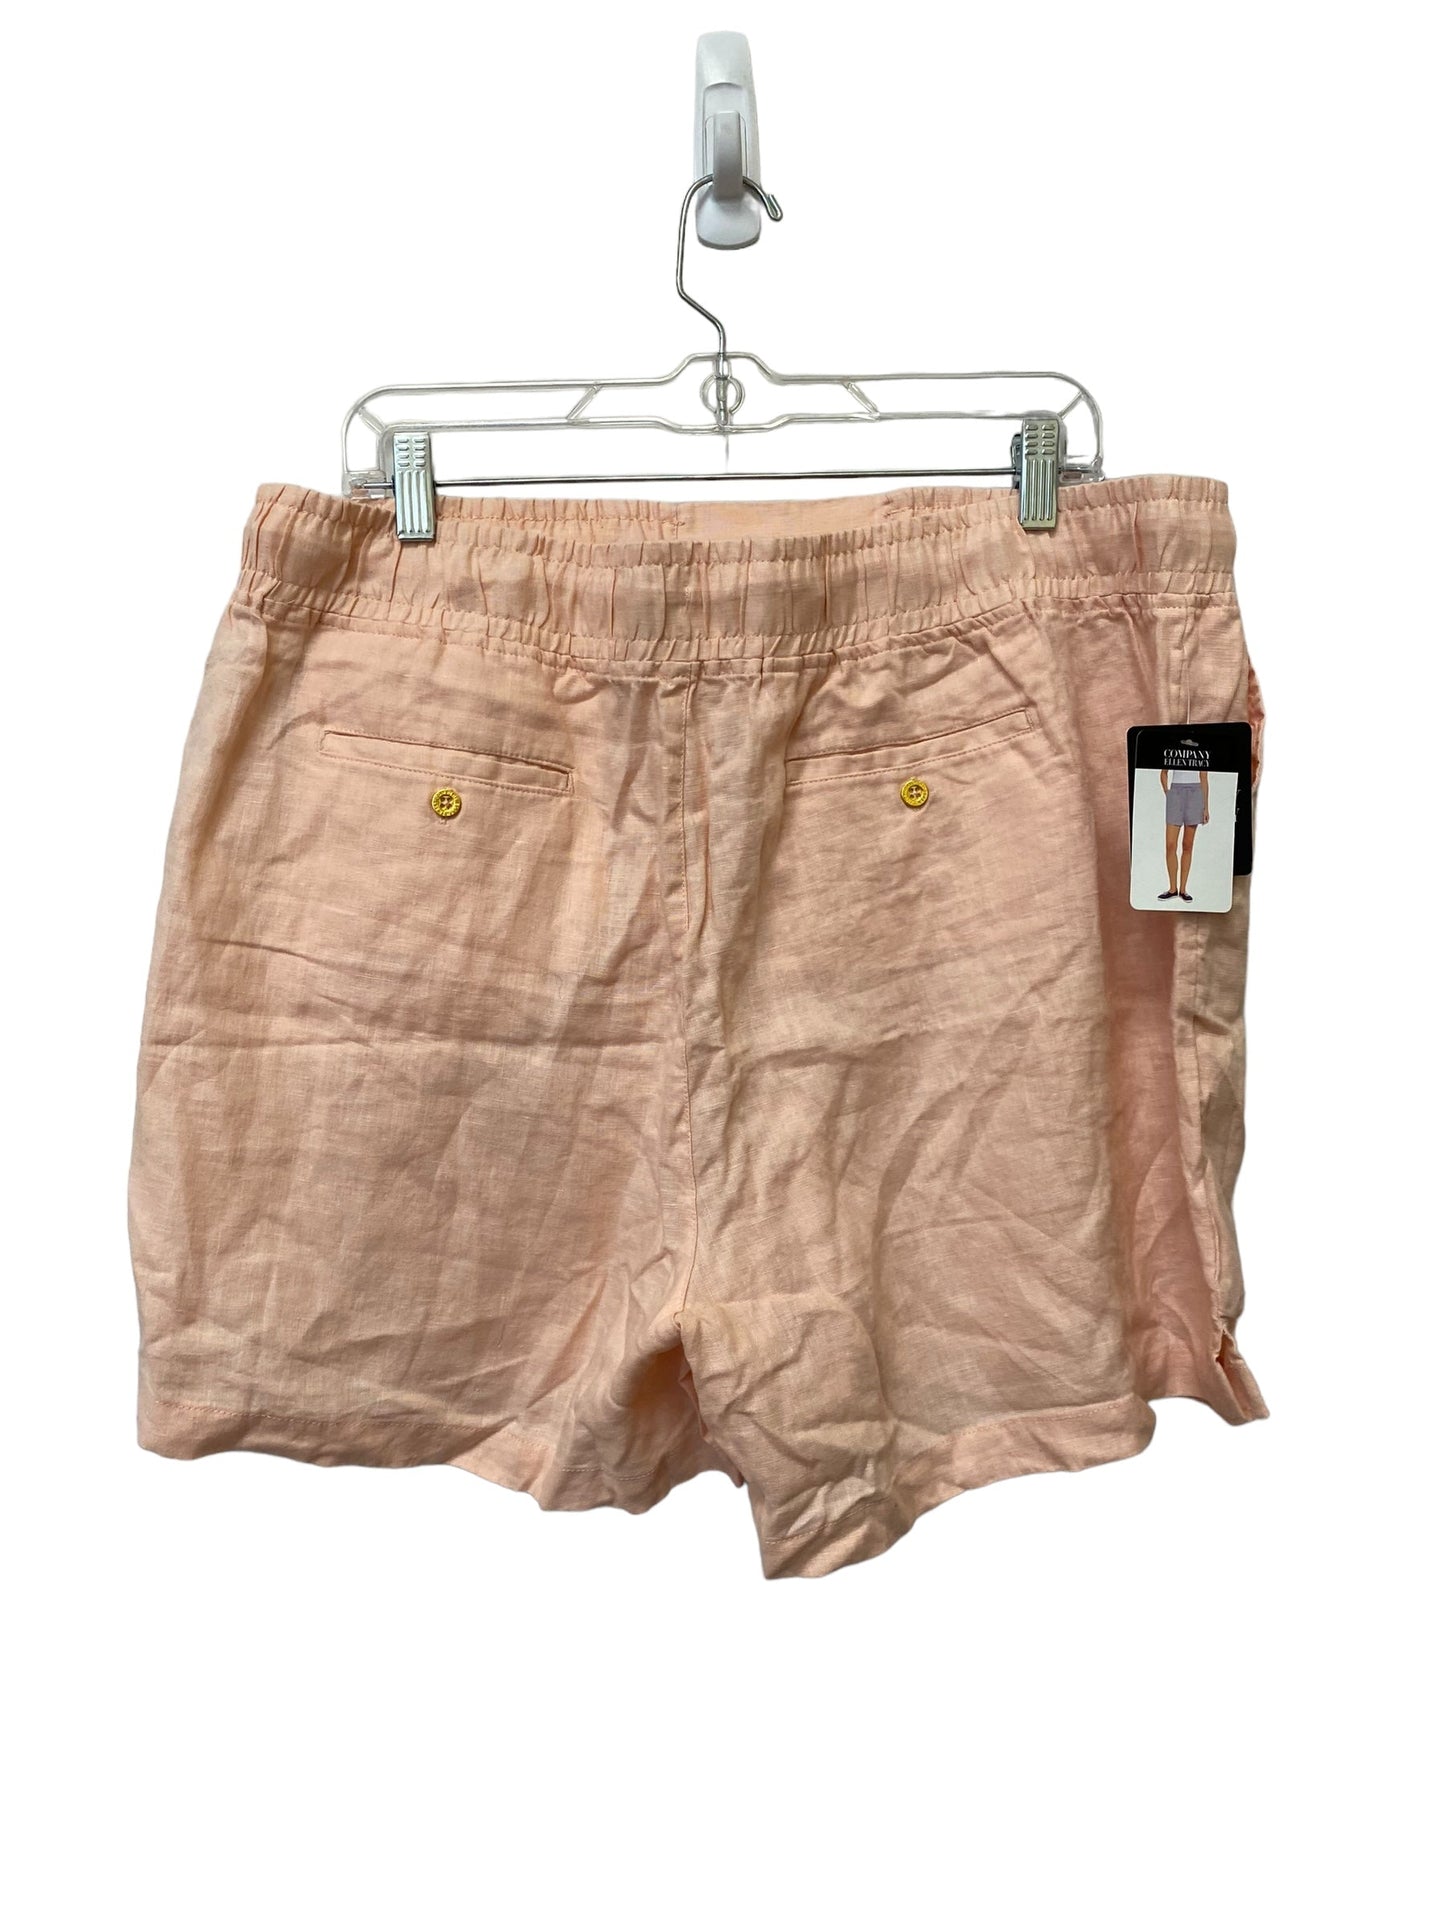 Shorts By Ellen Tracy  Size: 2x